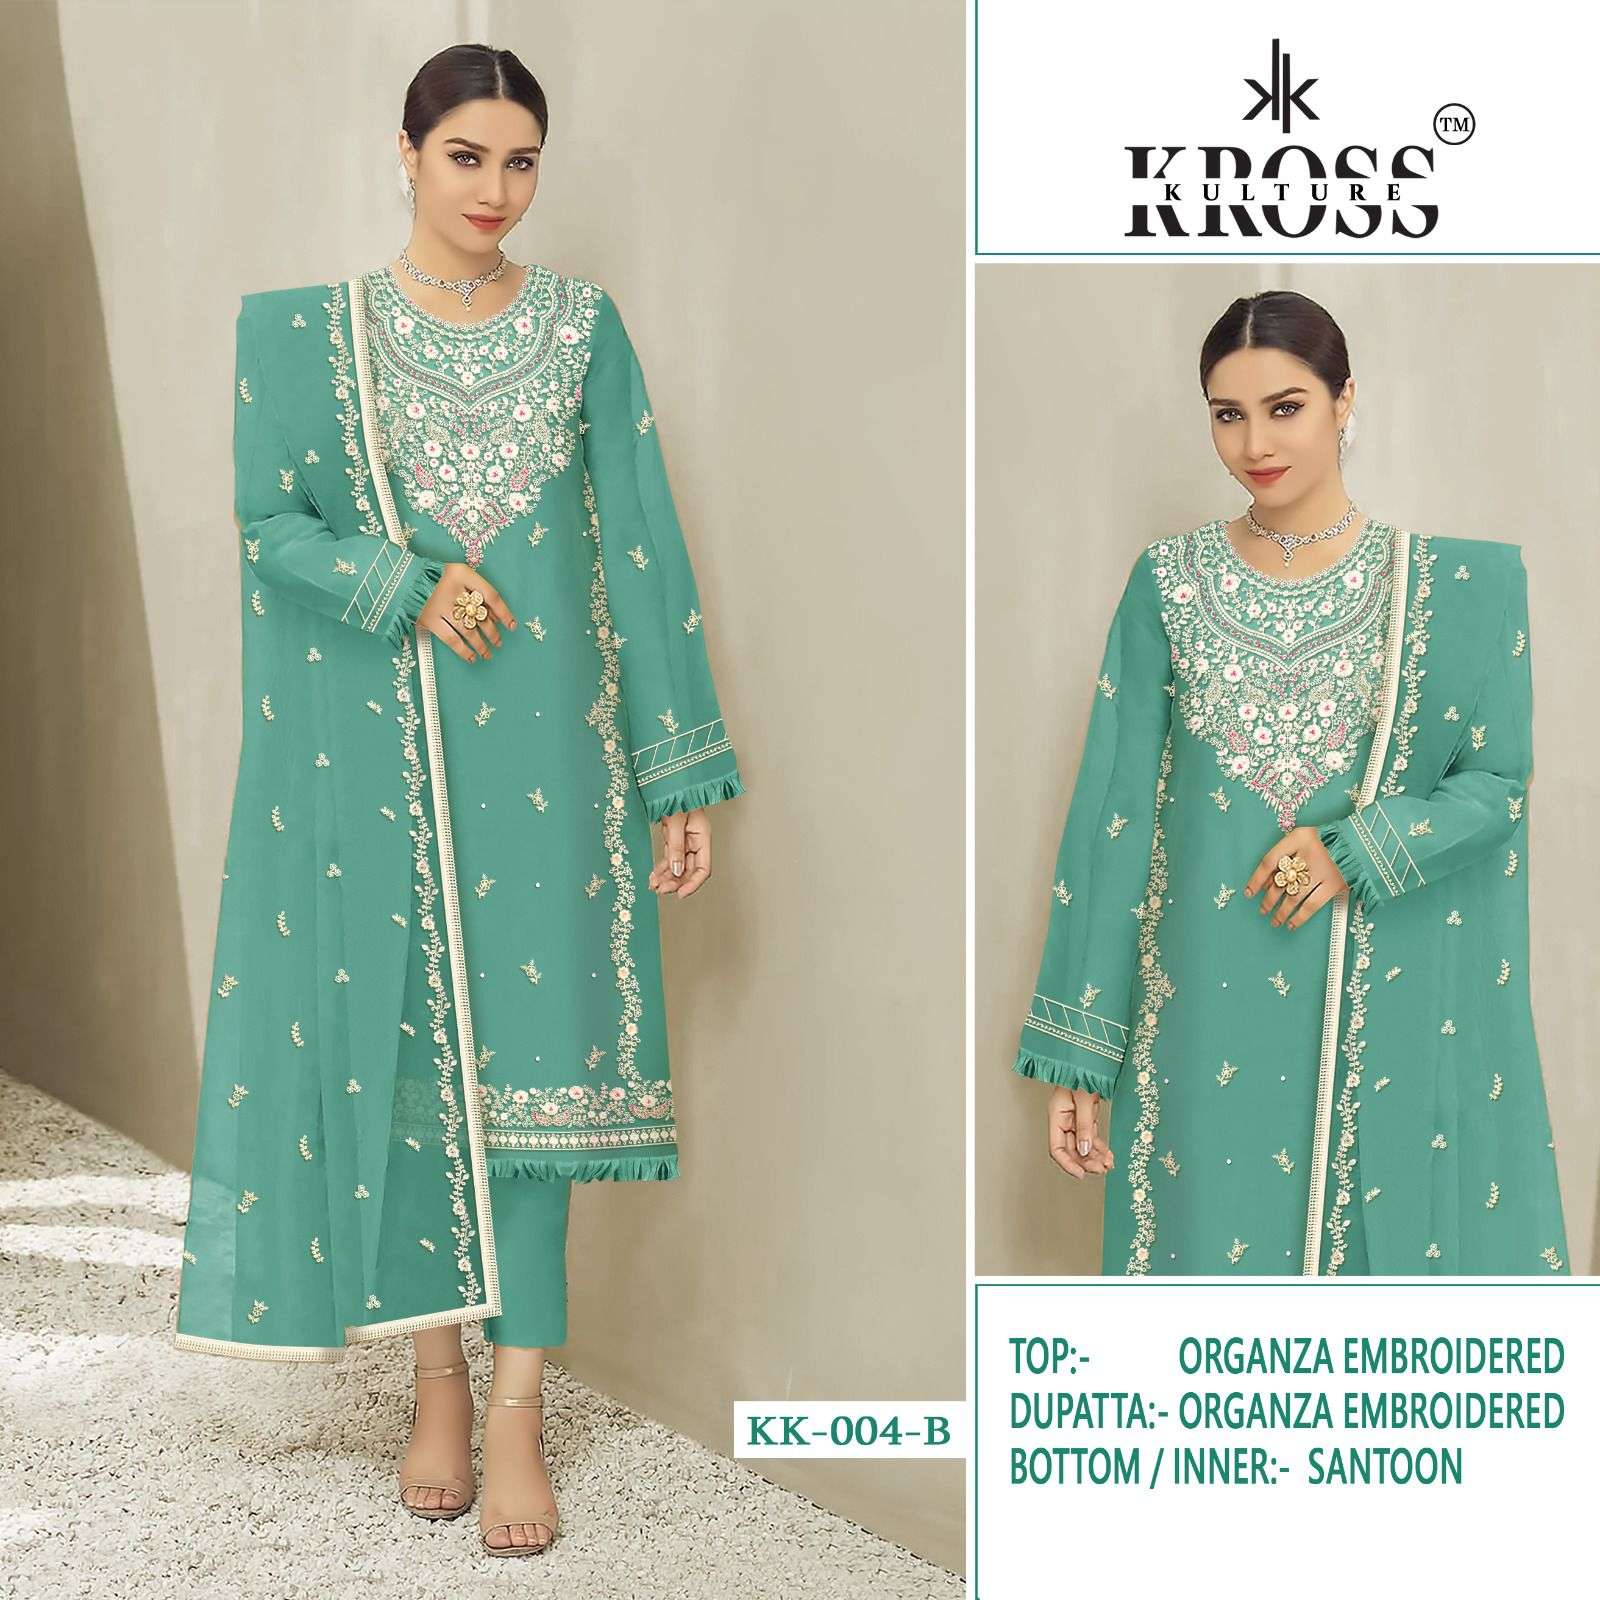 kross kulture kk-040 and kk-004 series latest designer pakistani salwar suits manufacturer surat